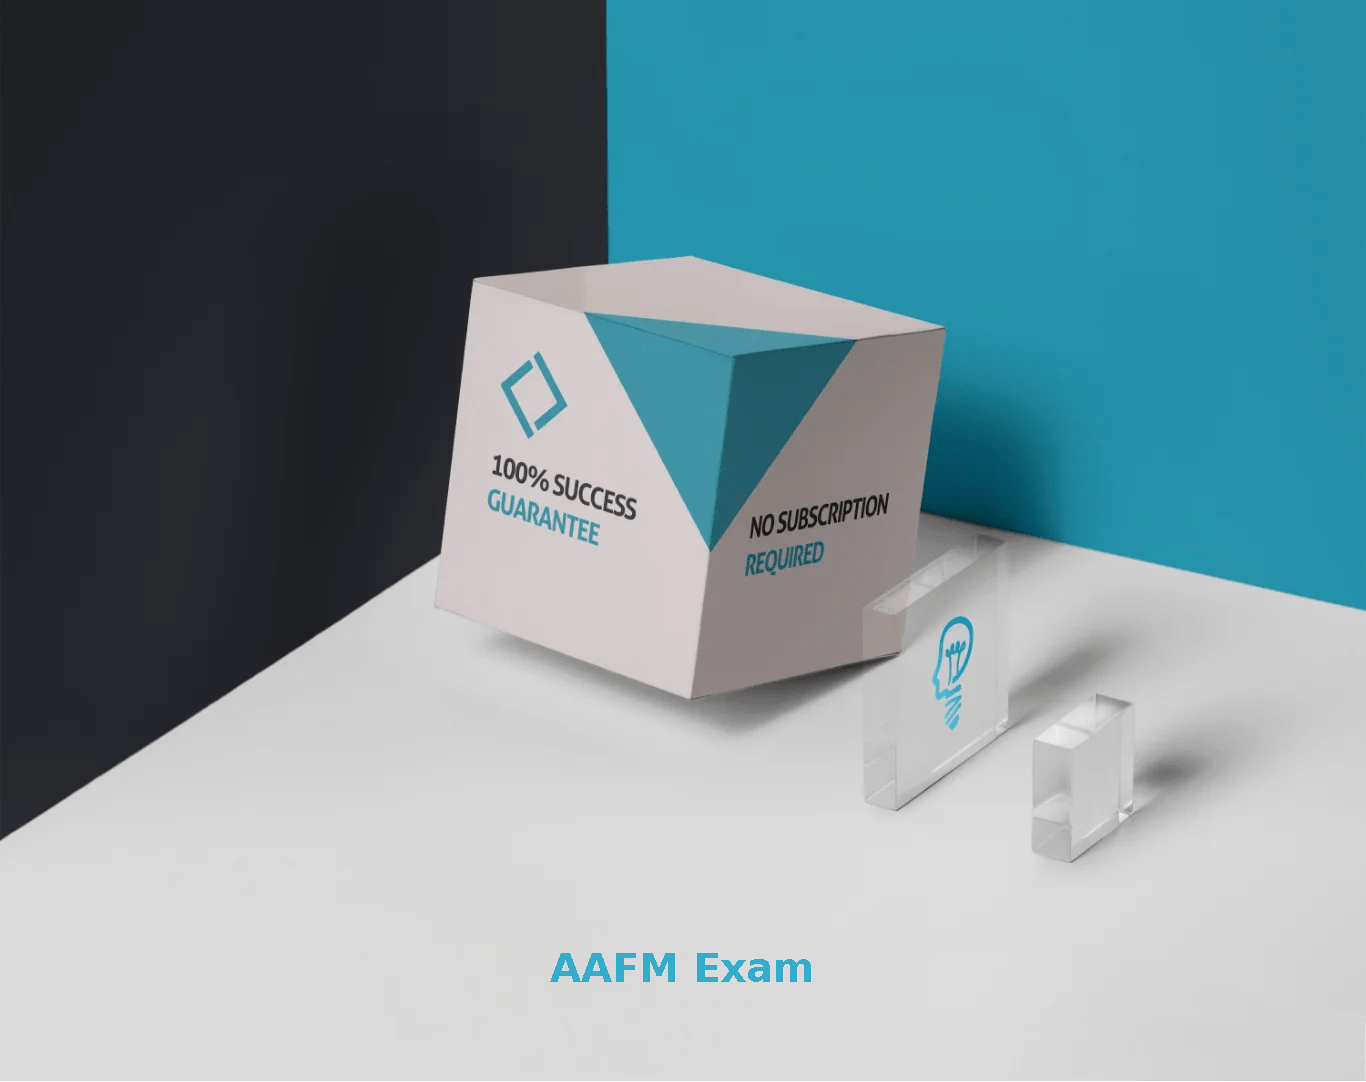 AAFM Exam Dumps